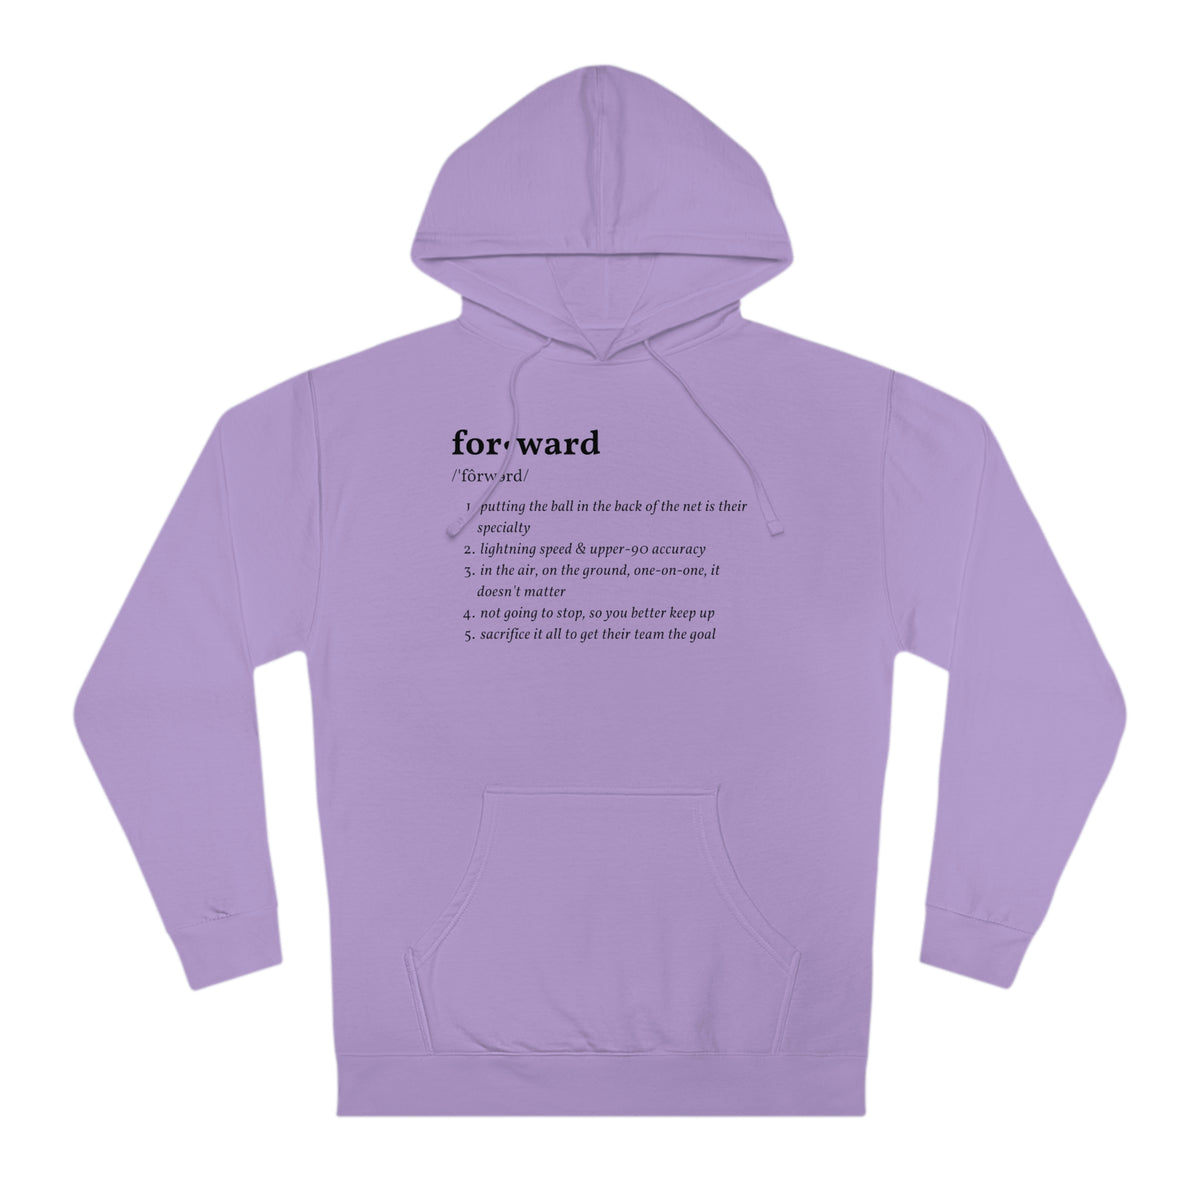 Forward Definition Adult Hooded Sweatshirt